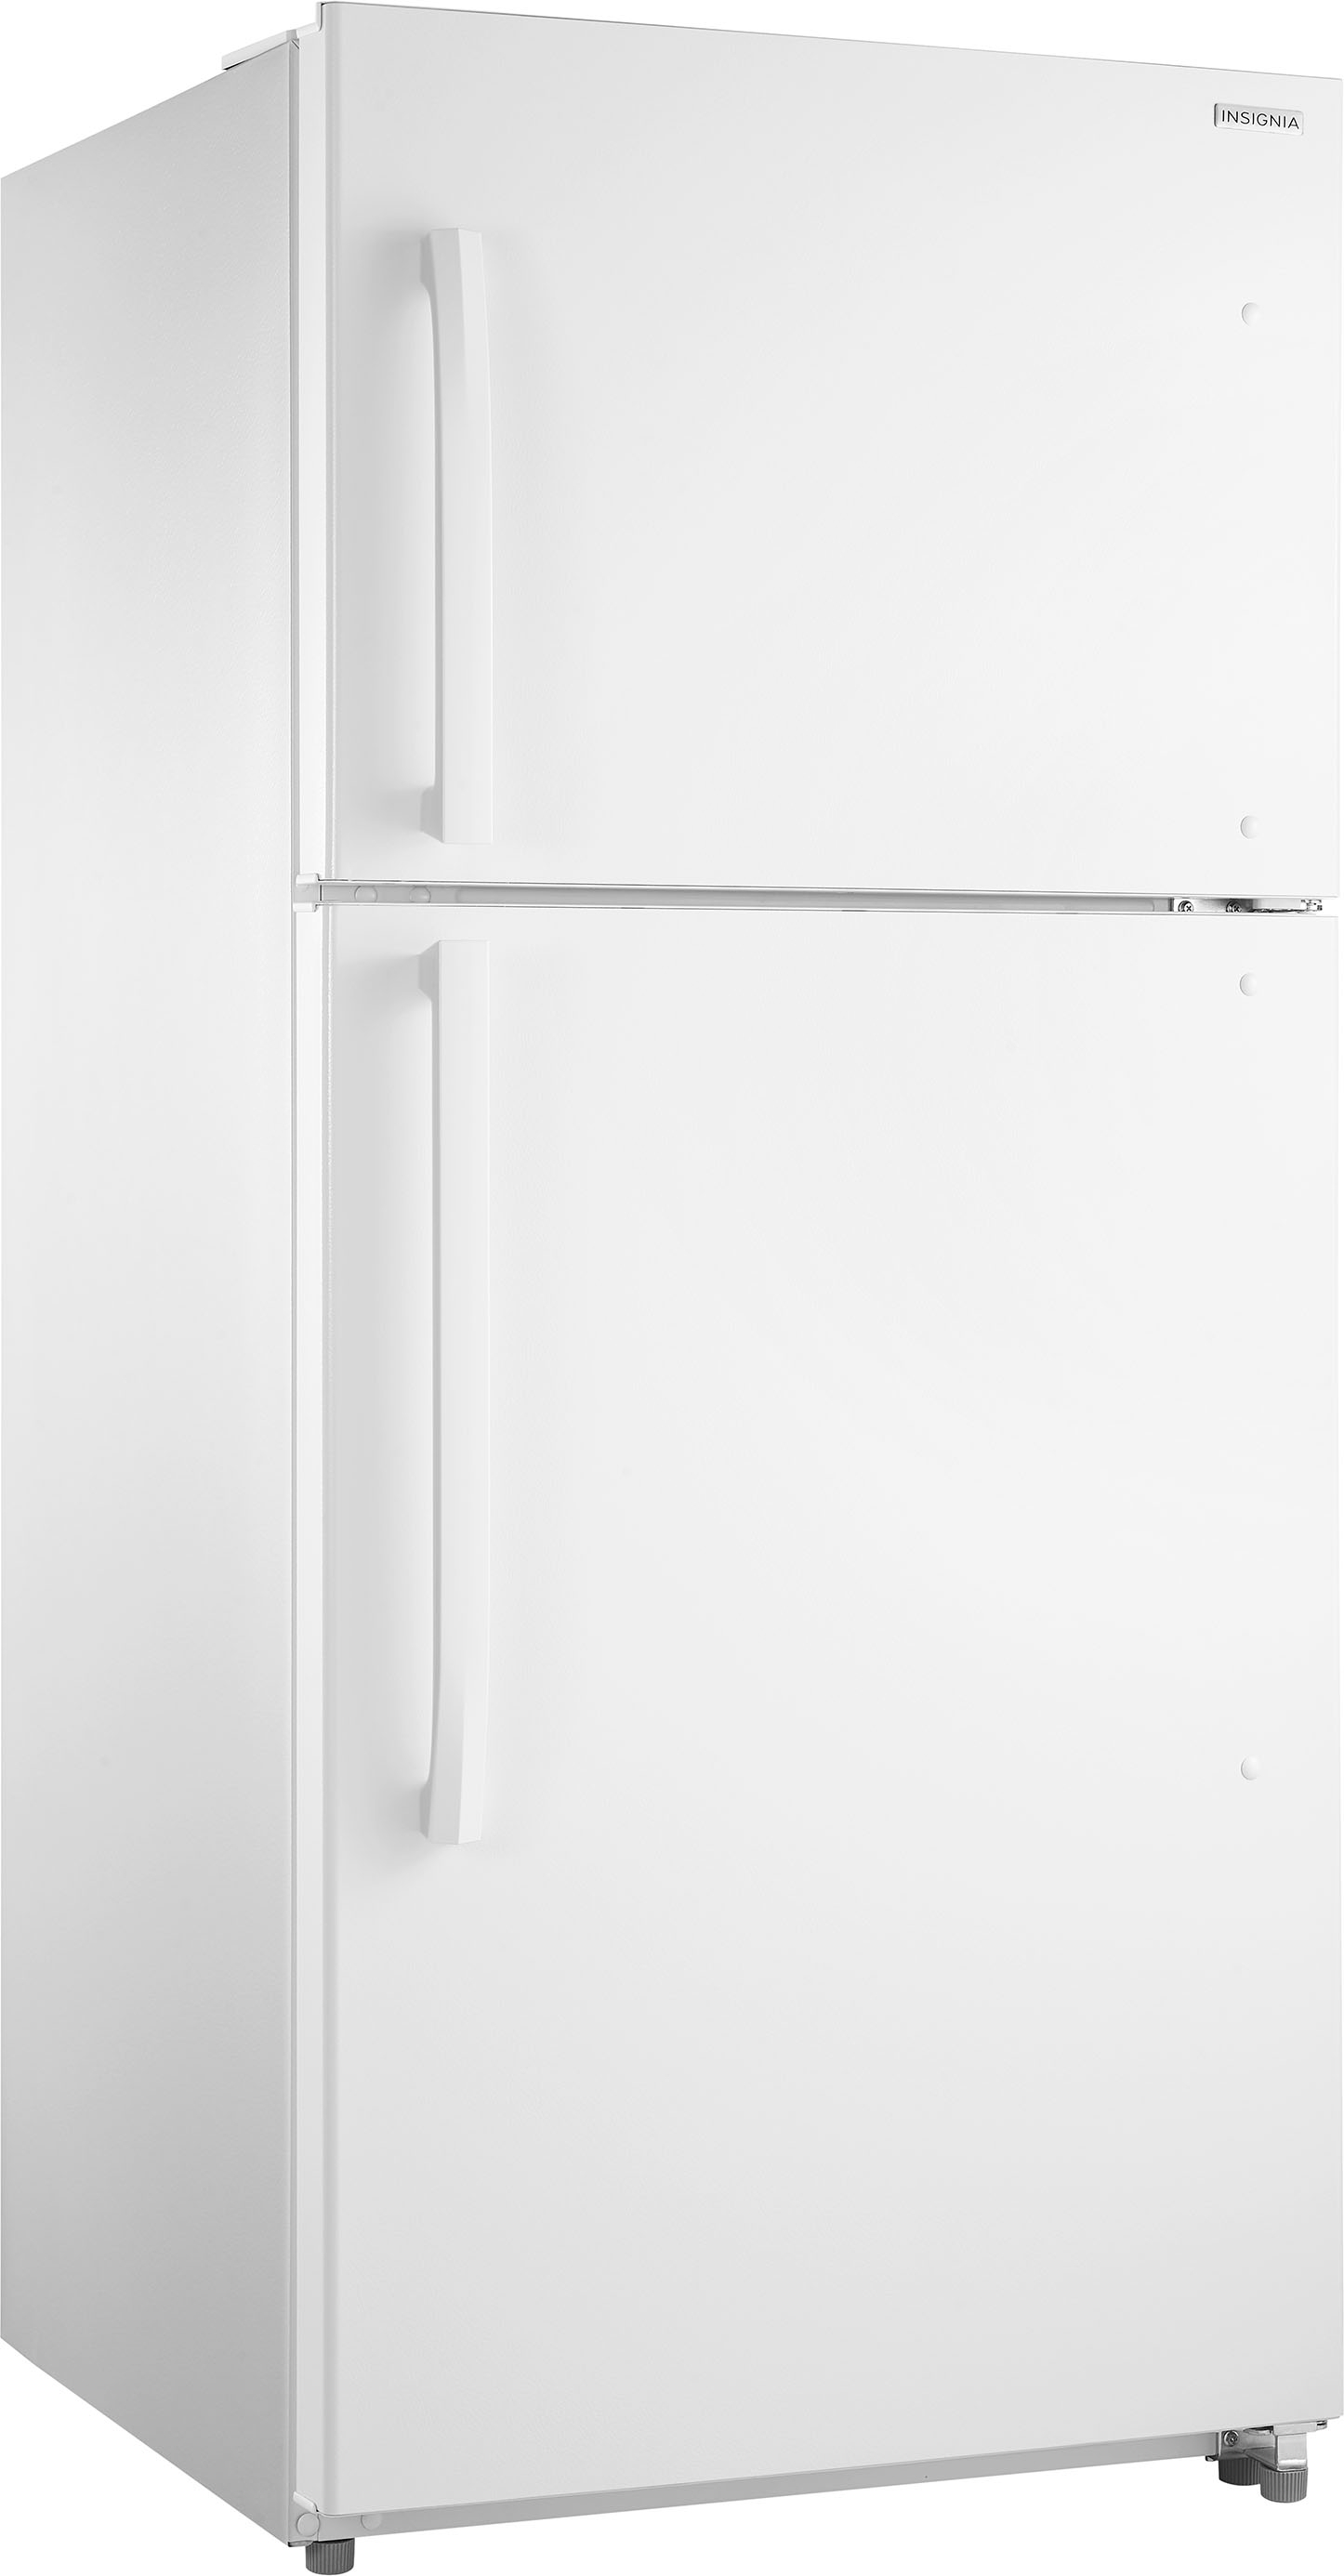 4 Best White Refrigerators on the Market